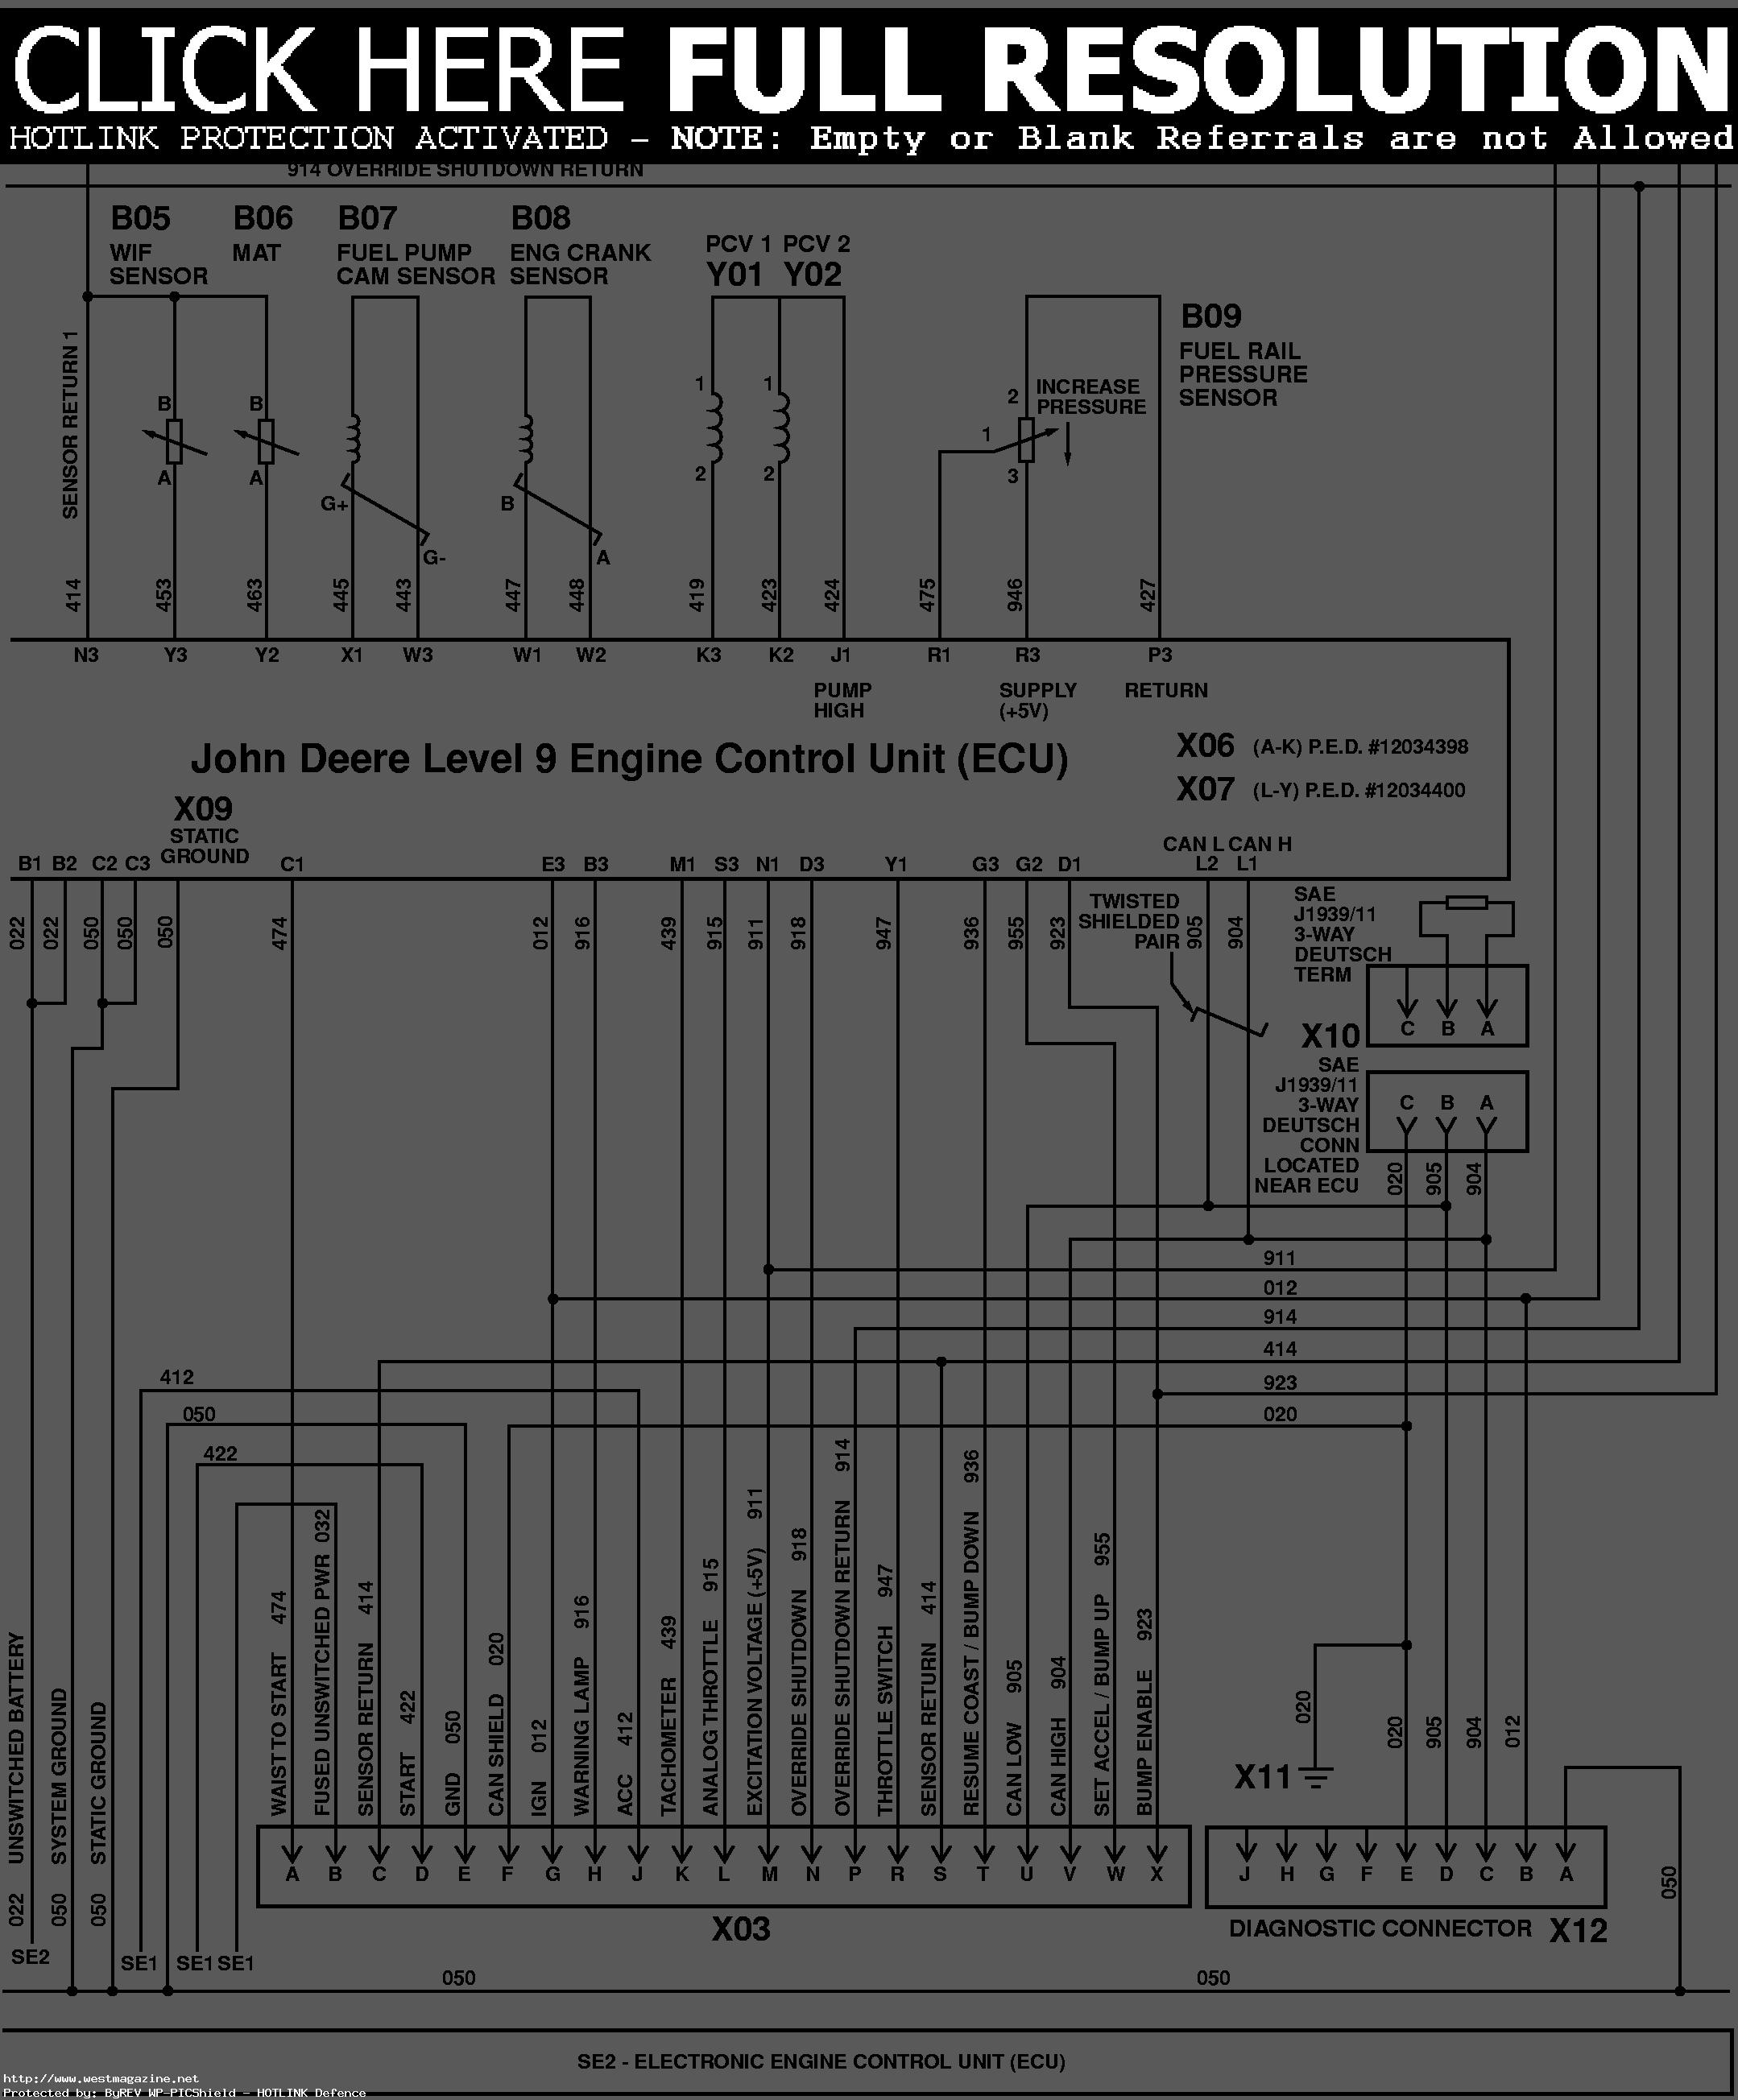 Mnl-2785] John Deere Lt155 Technical Manual | 2019 Ebook Library - John Deere Lt155 Wiring Diagram